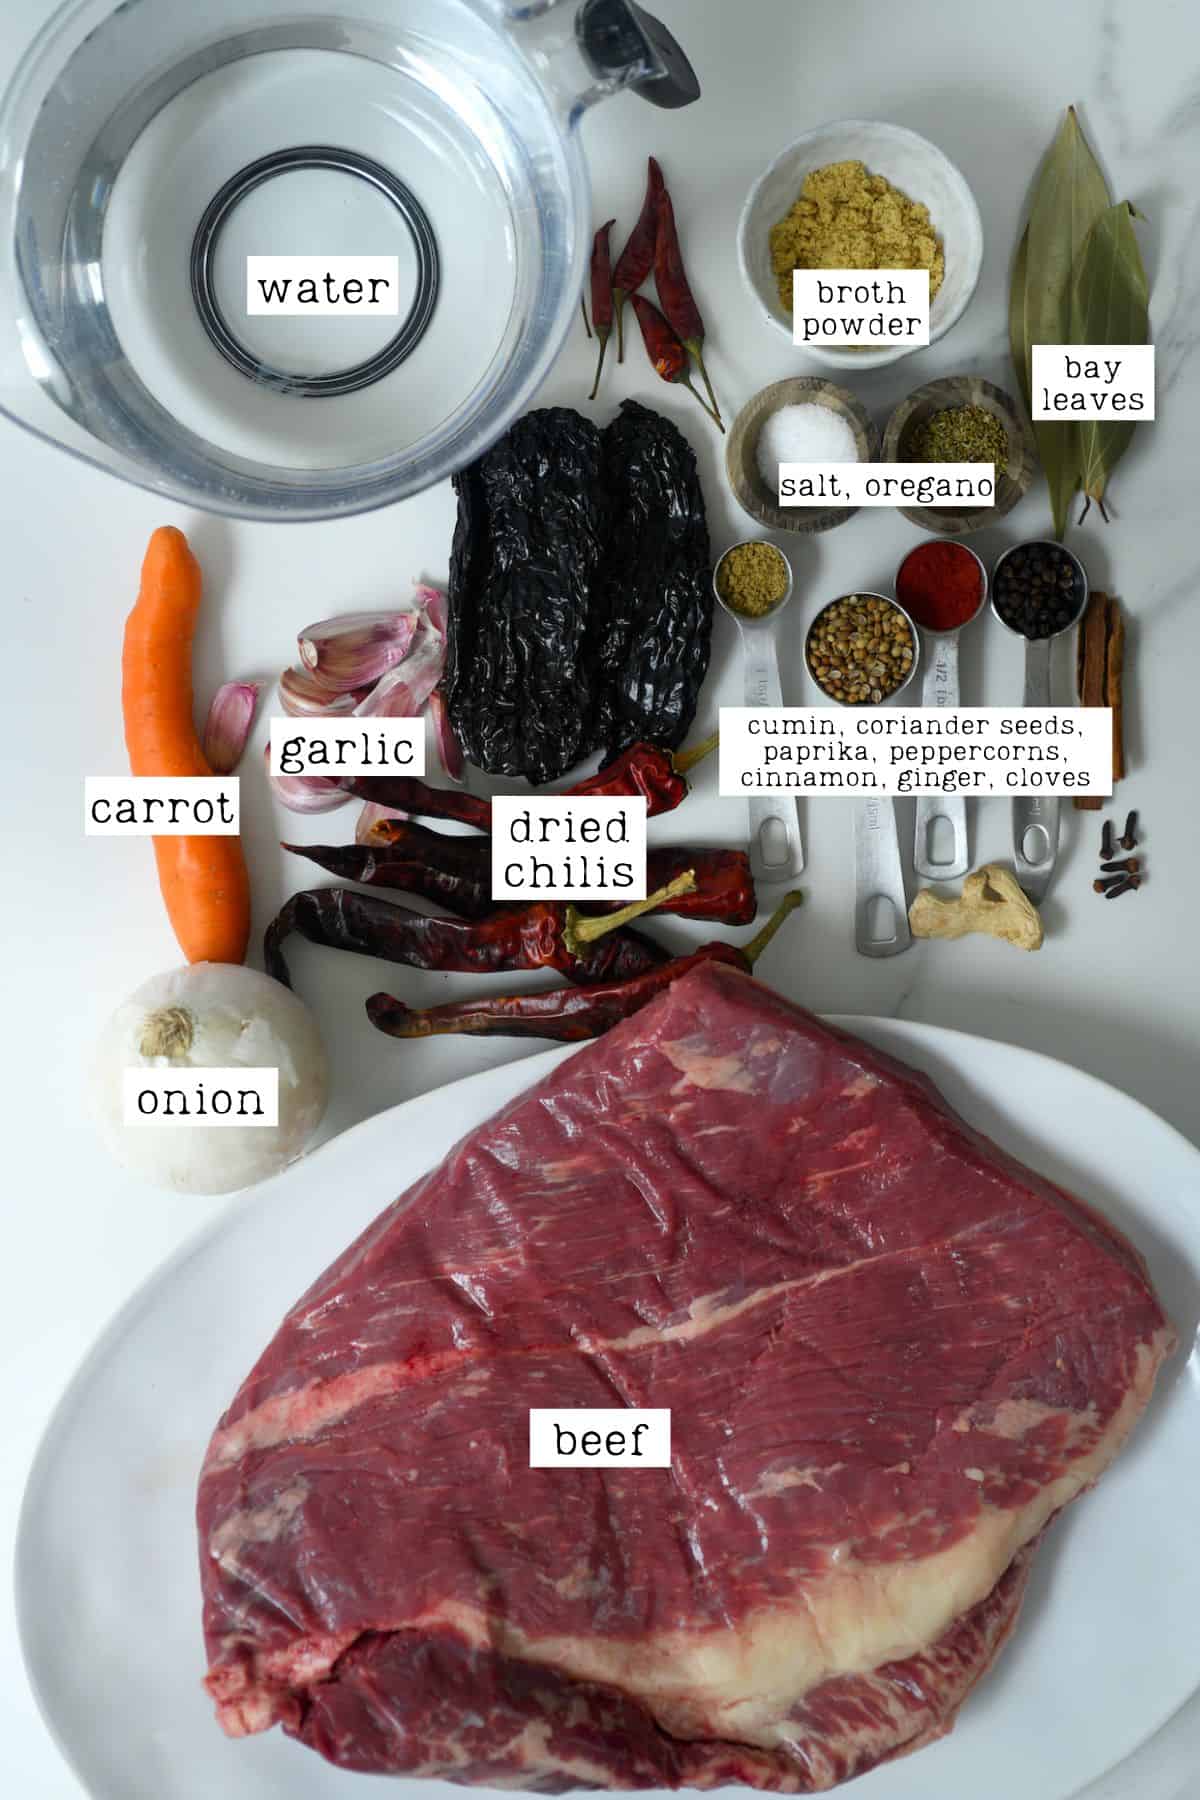 Ingredients for Birria tacos